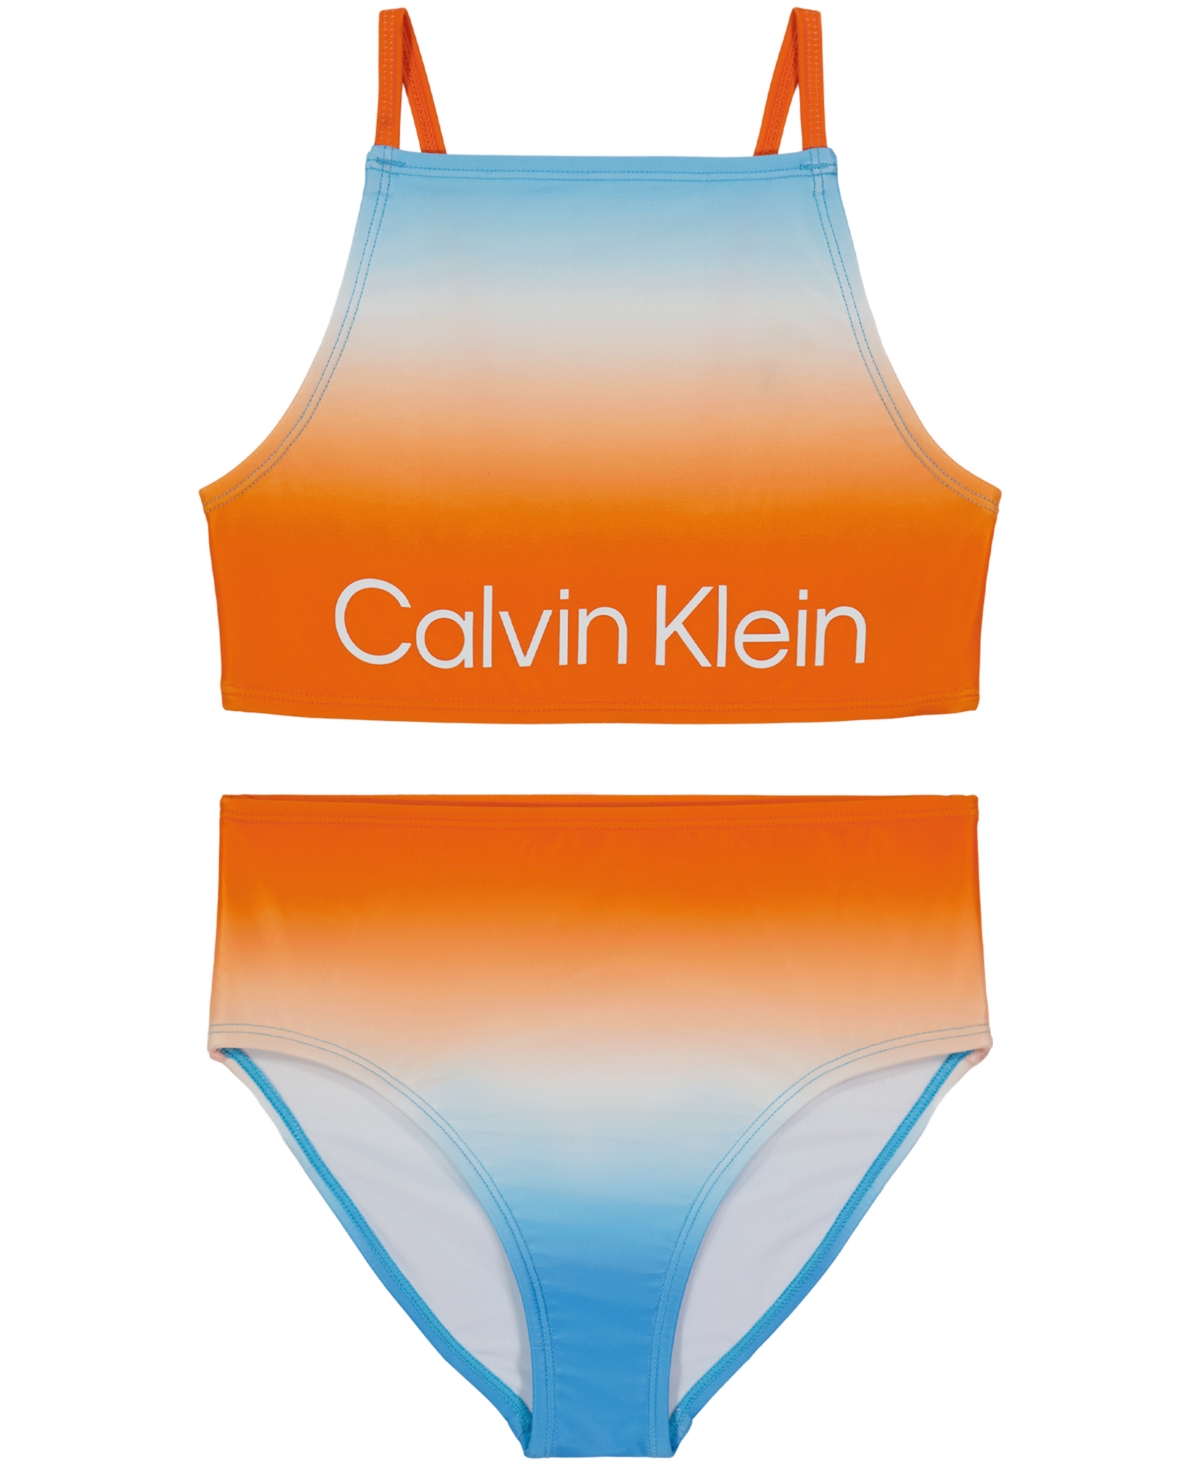 Women's CALVIN KLEIN Bikinis Sale, Up To 70% Off